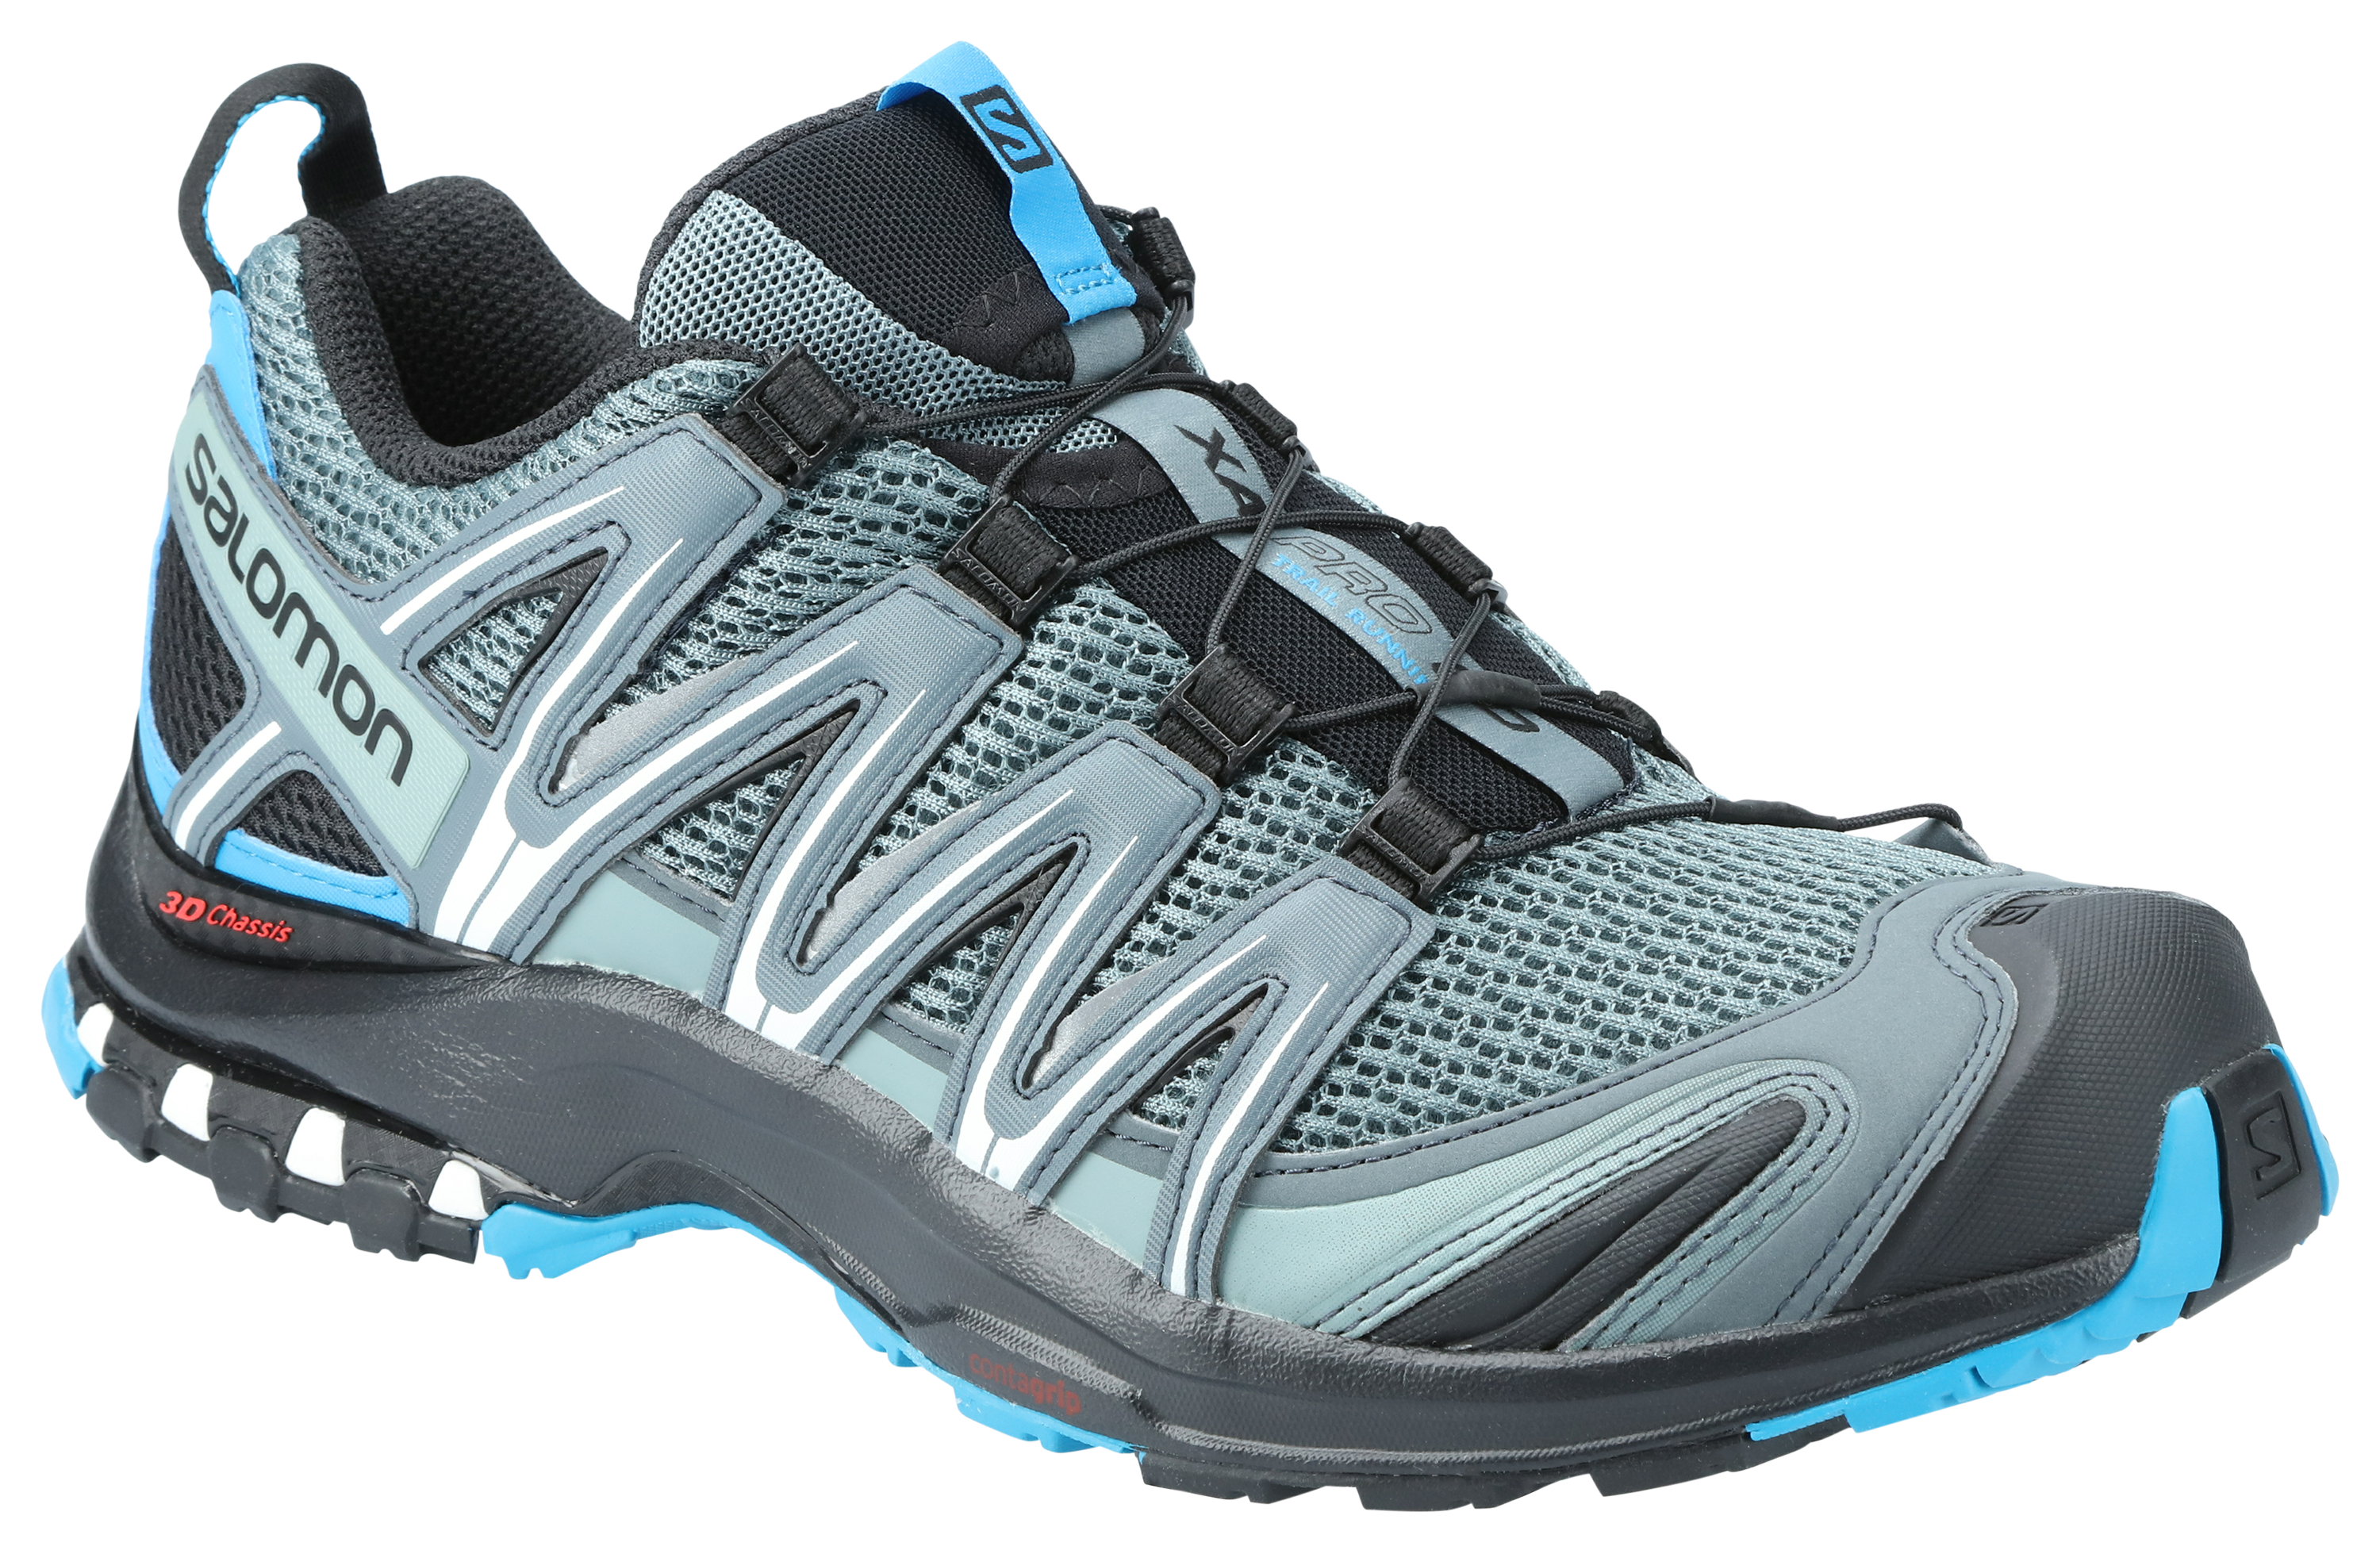 Salomon XA Pro 3D Trail Running Shoes for Men - Stormy Weather/Black Hawaiian - 13M